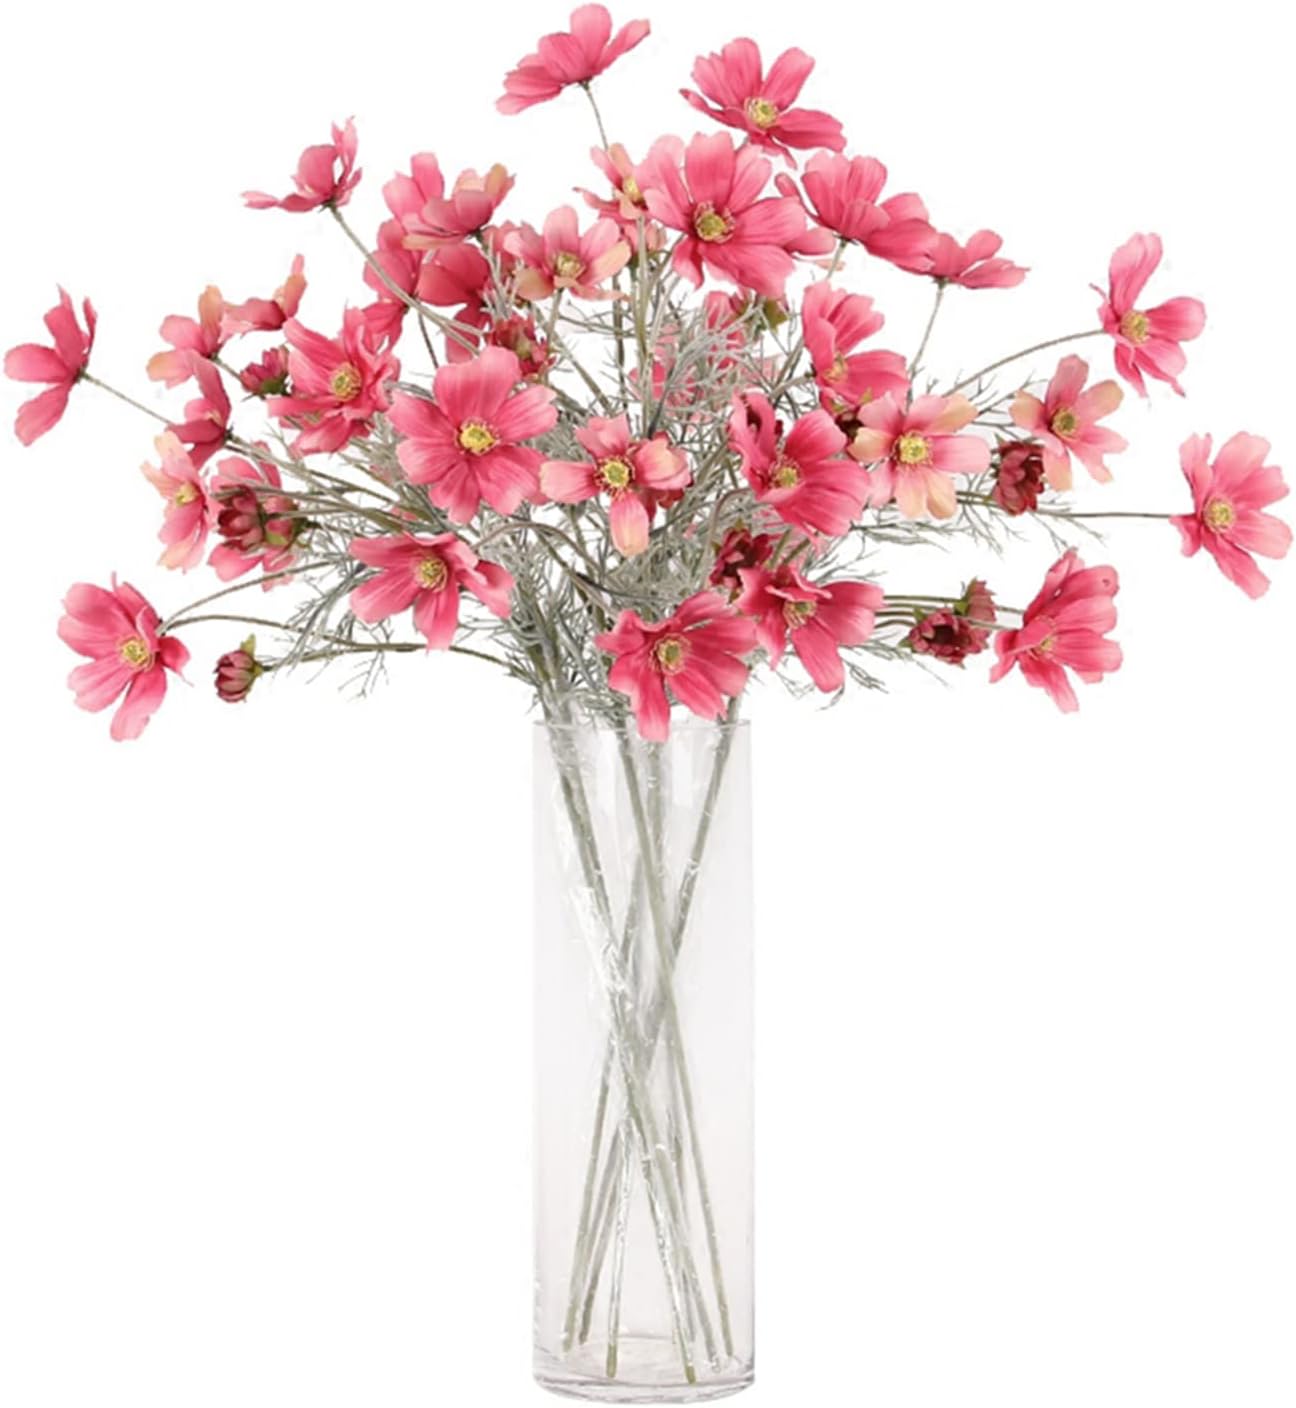 2 Artificial Flowers Plants. Coreopsis Silk Flower Arrangements Wedding Bouquet Decorations Plastic floral table centerpieces for home, kitchen, and garden party decor Approx 23.6&#x27;&#x27; High - Deep Powder.